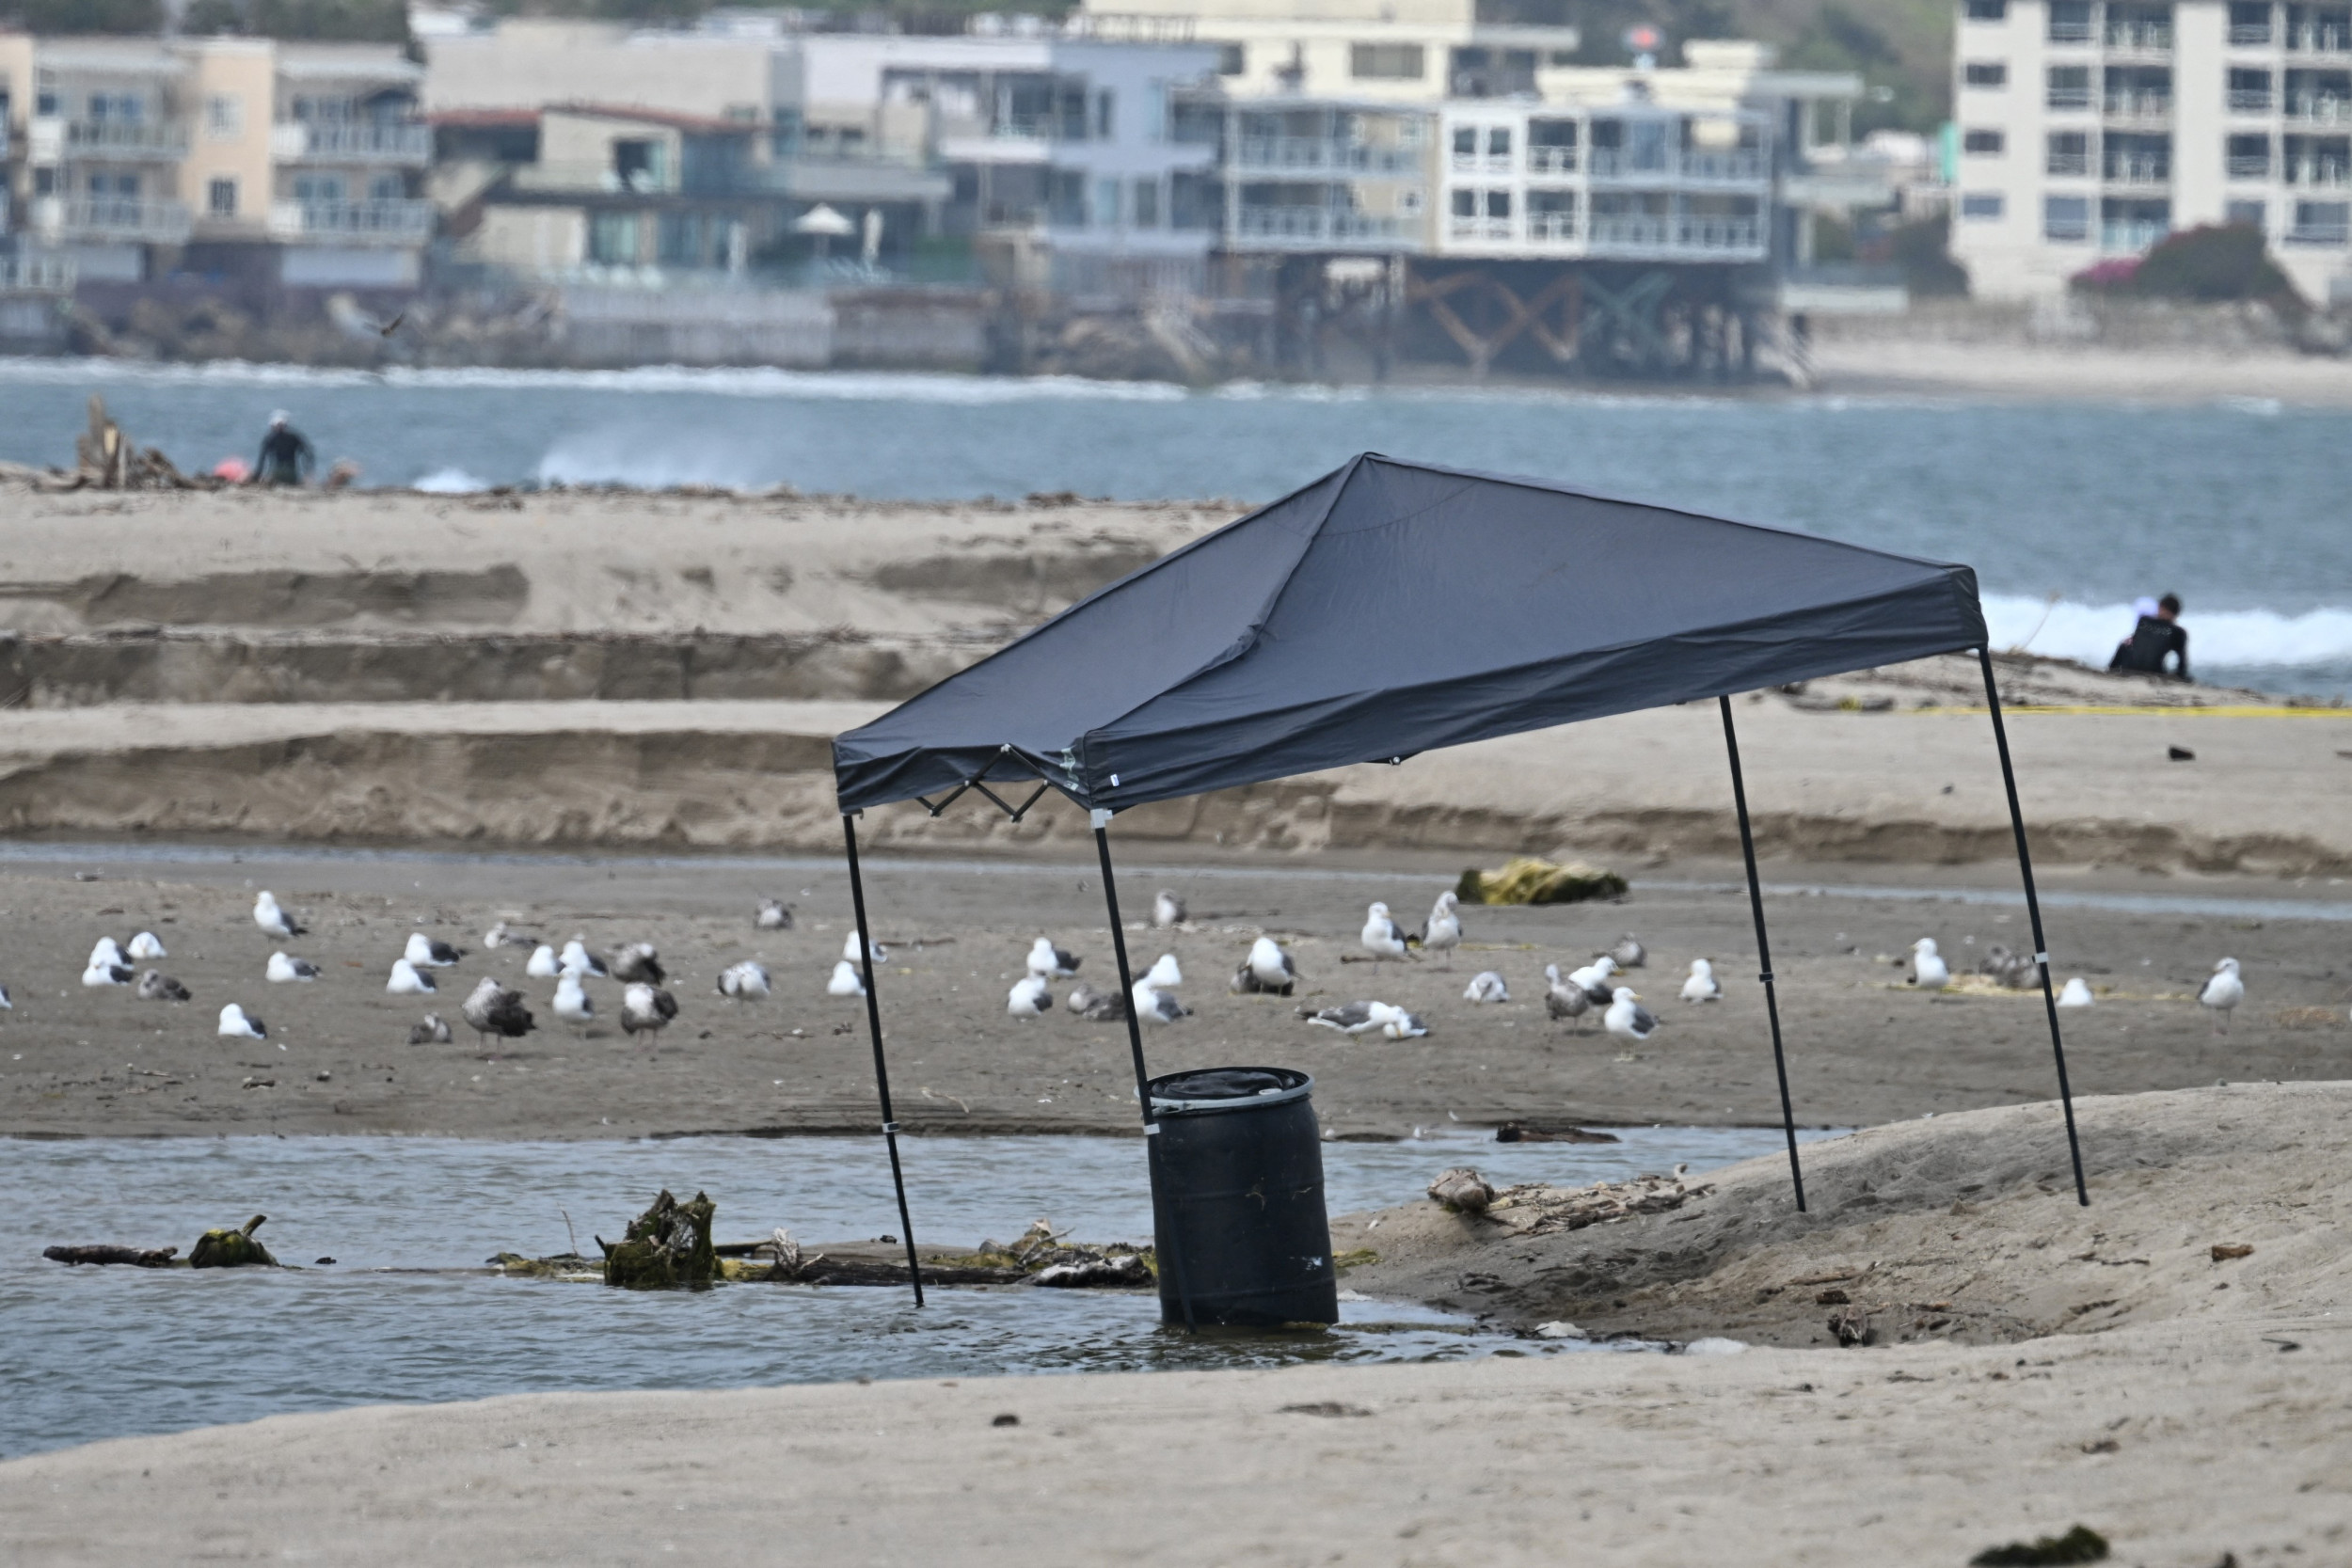 Beach Hunters Nude - Body Found in Barrel on Malibu Beach 'Didn't Look Decomposed'â€”Police